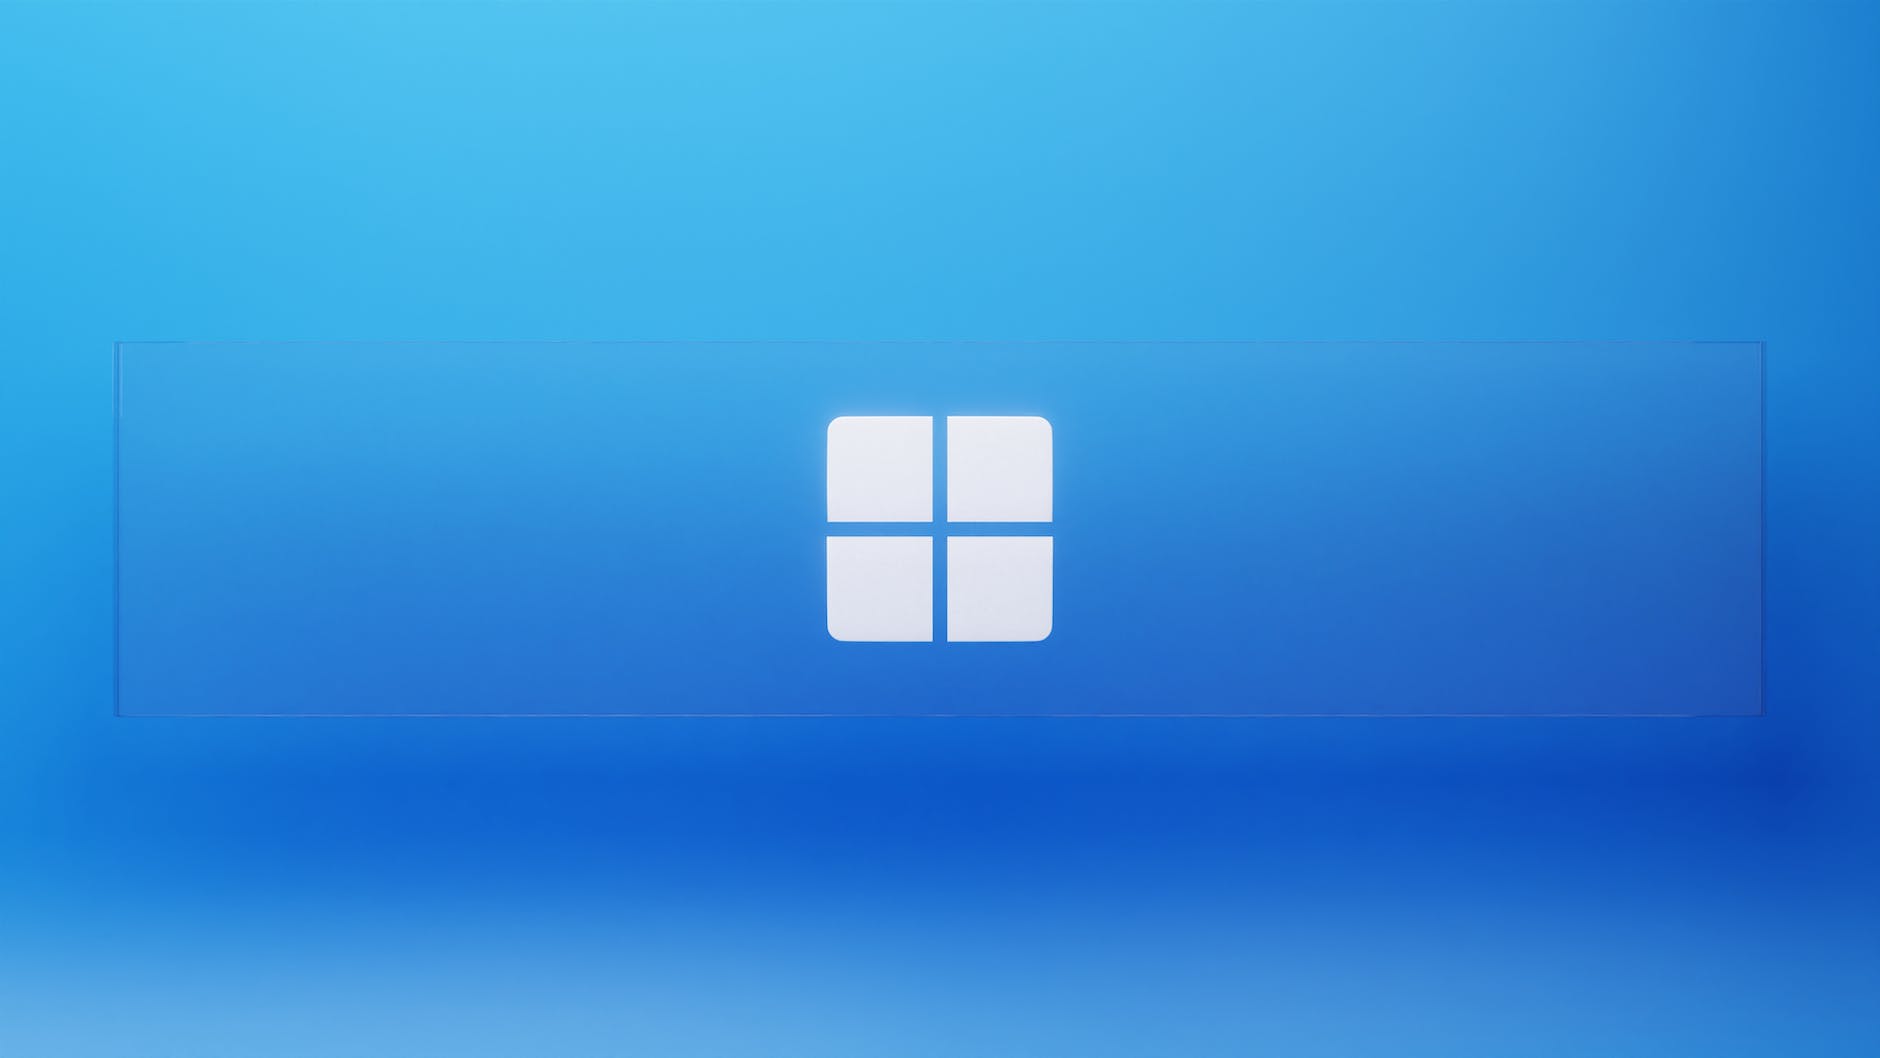 blue and white logo on blue background